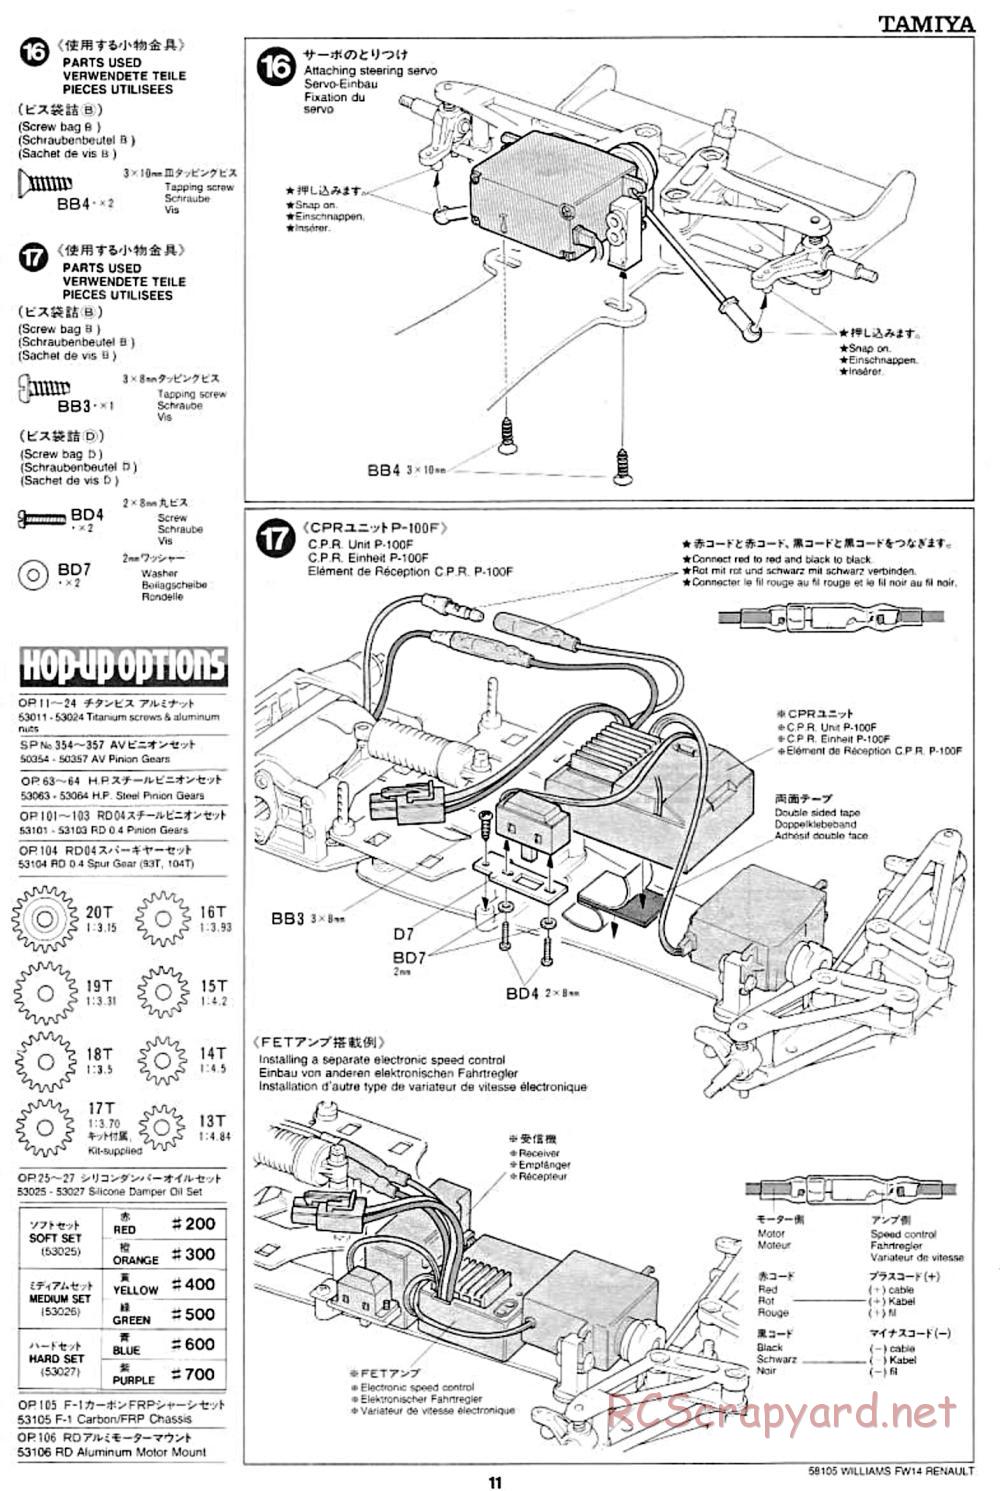 Tamiya - Williams FW14 Renault - F102 Chassis - Manual - Page 11